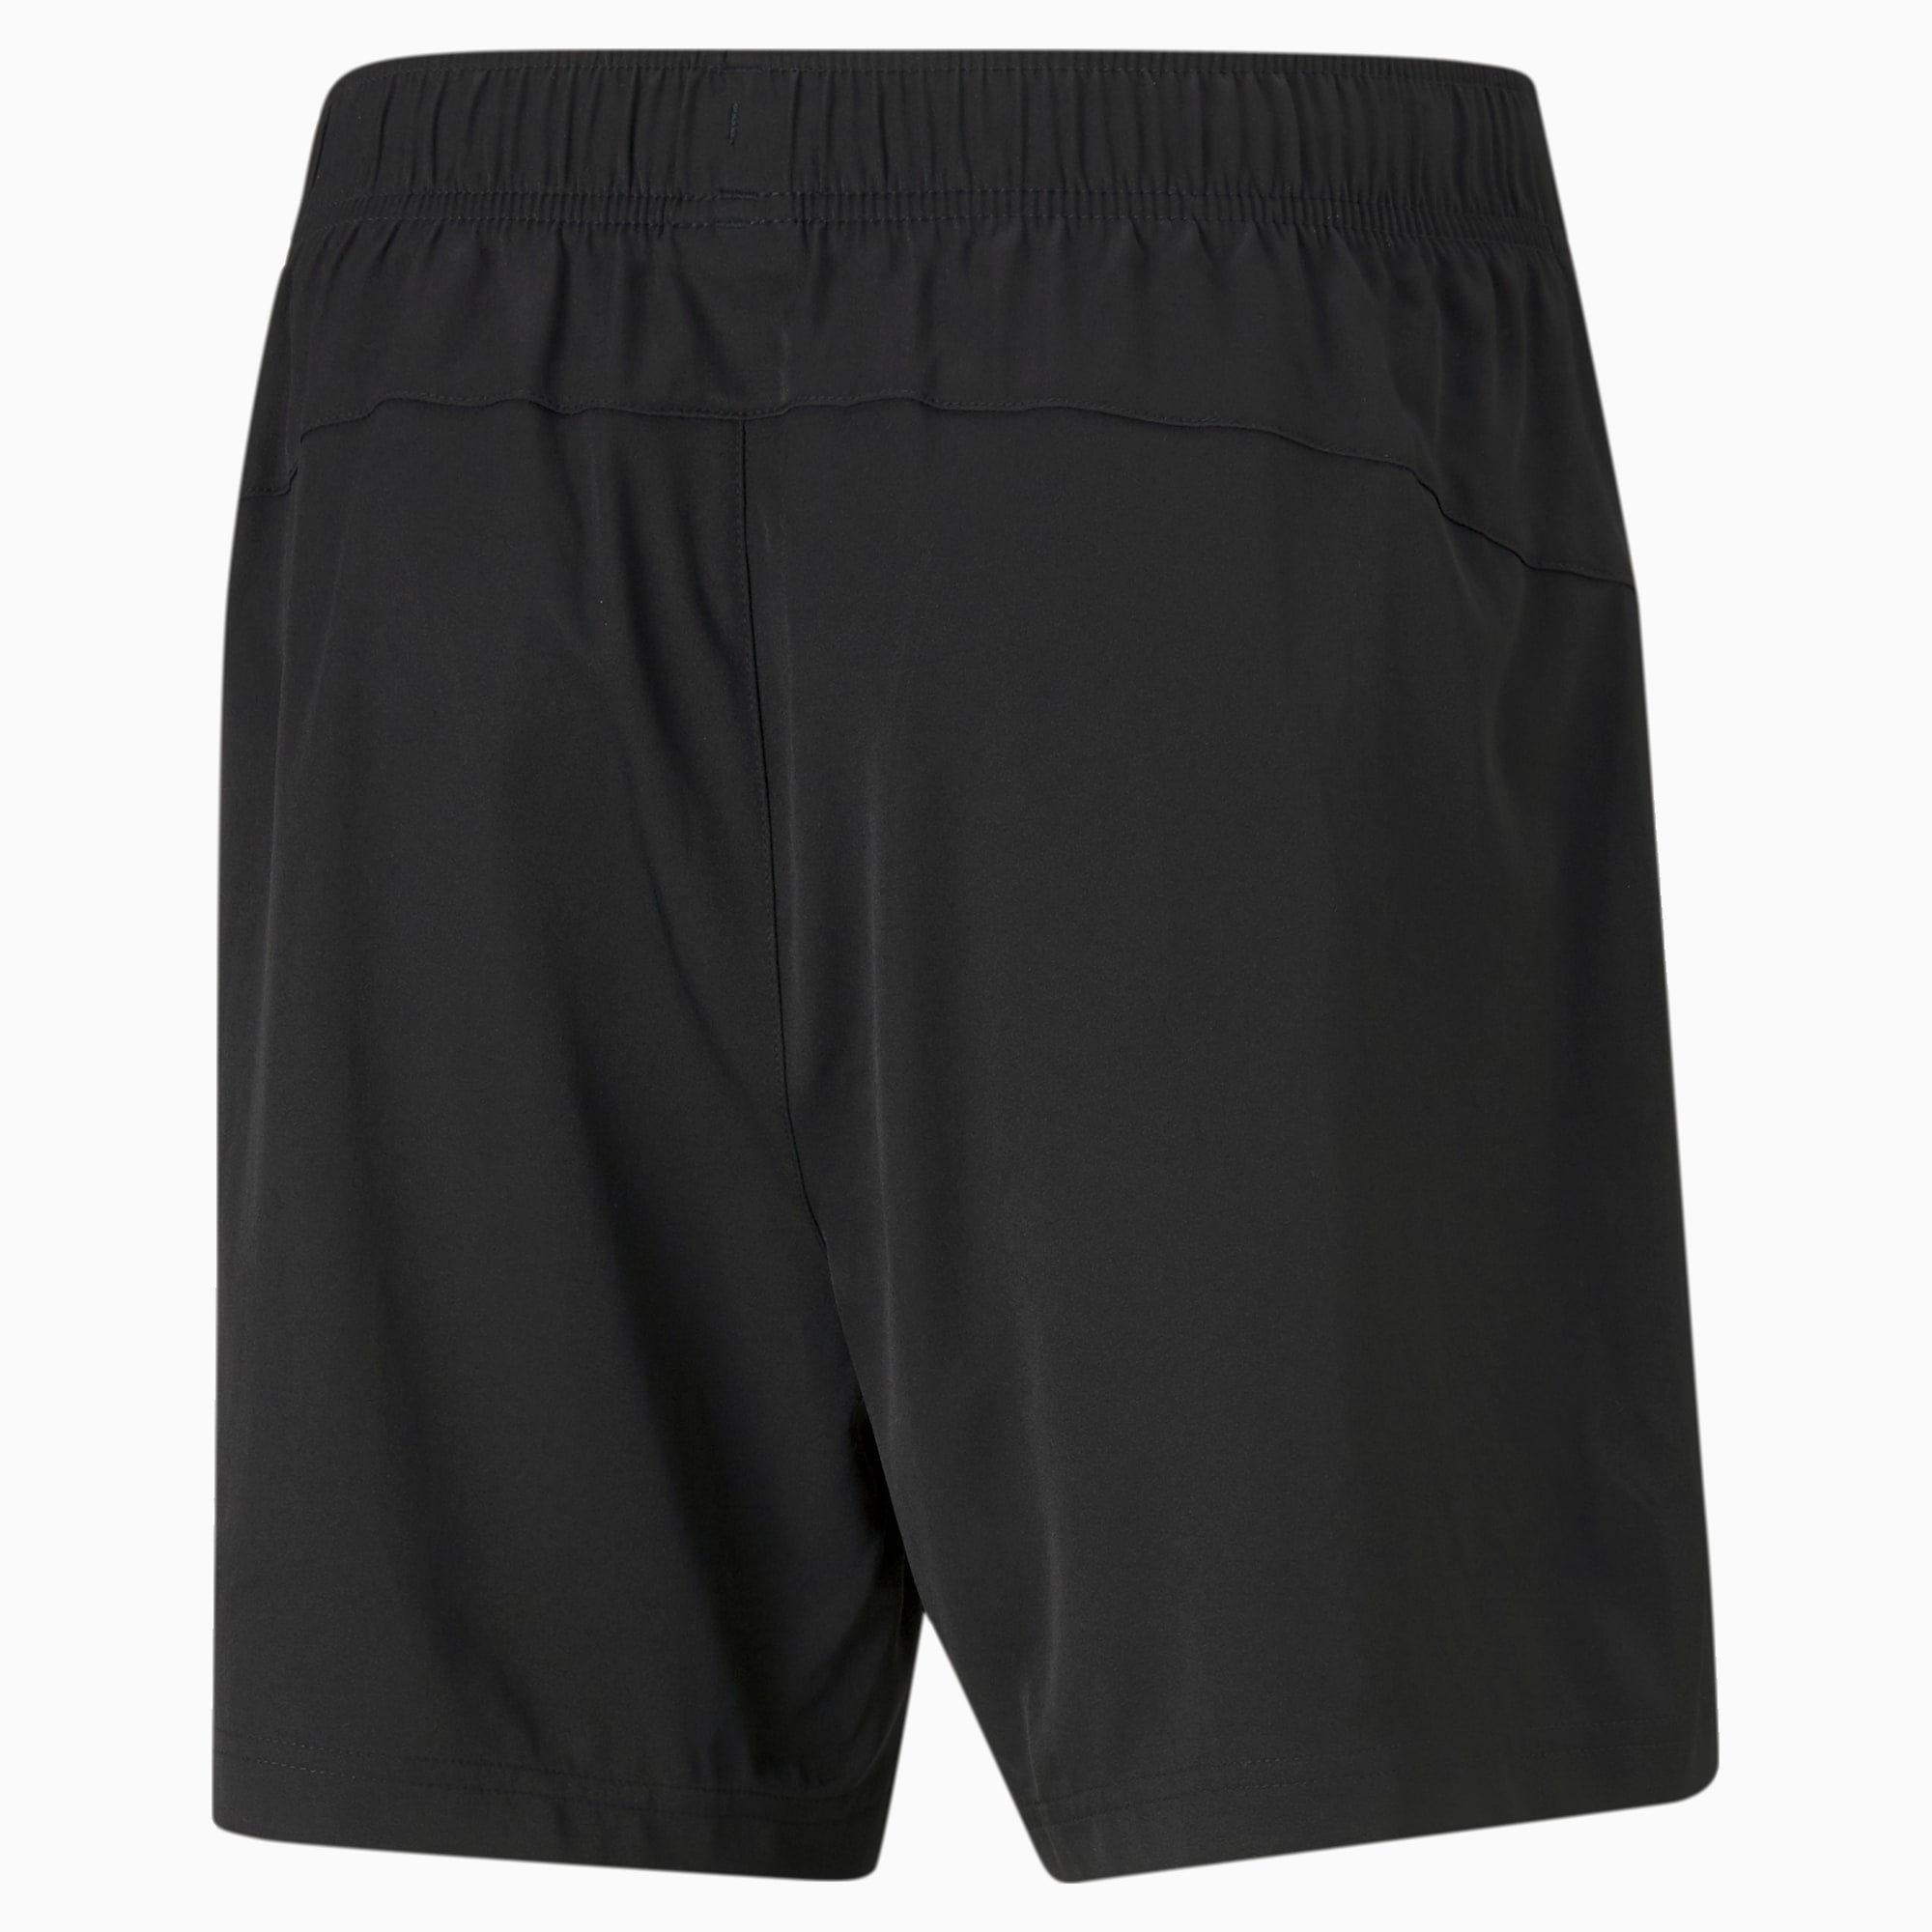 PUMA Active Woven 5 Men's Shorts, Black, Size S, Clothing